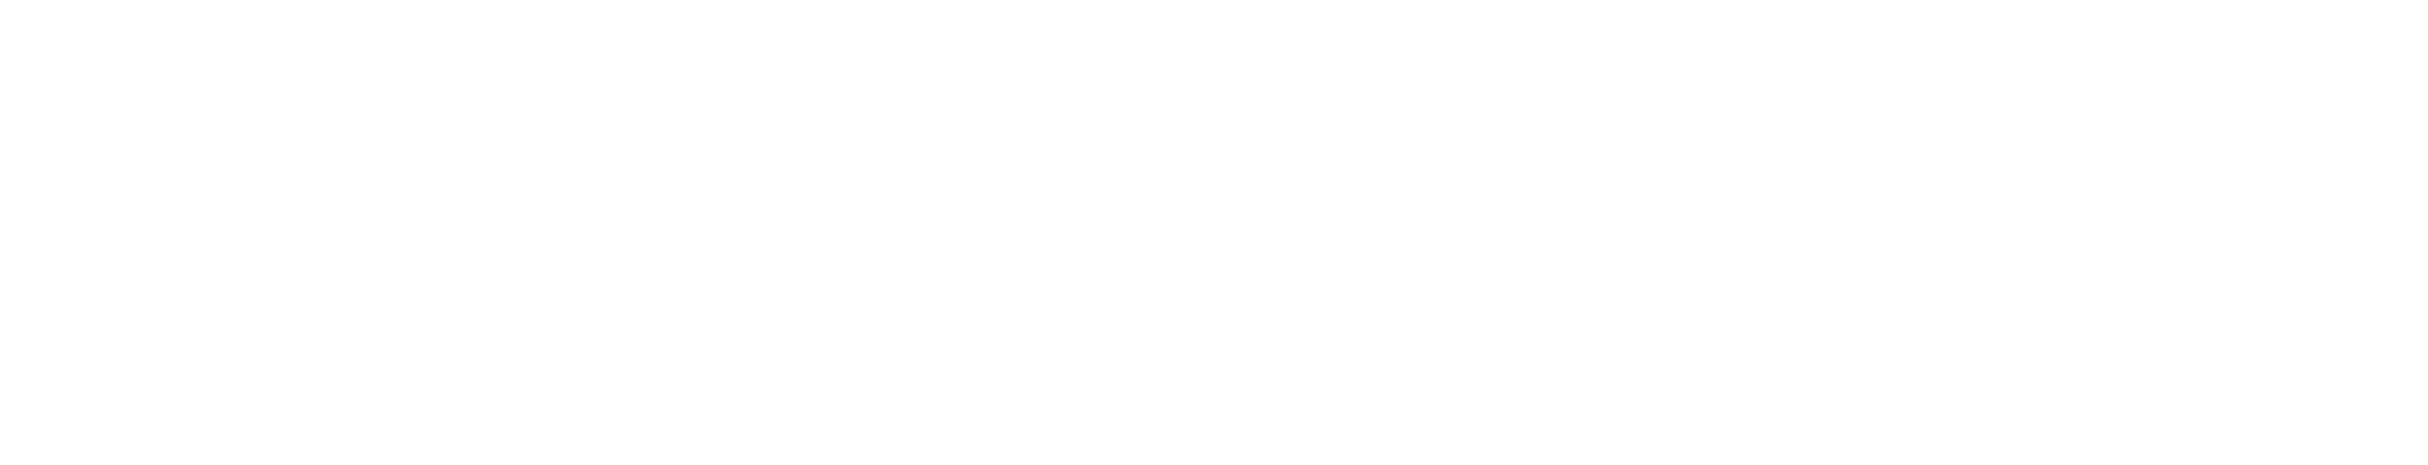 Turbomachinery Laboratory